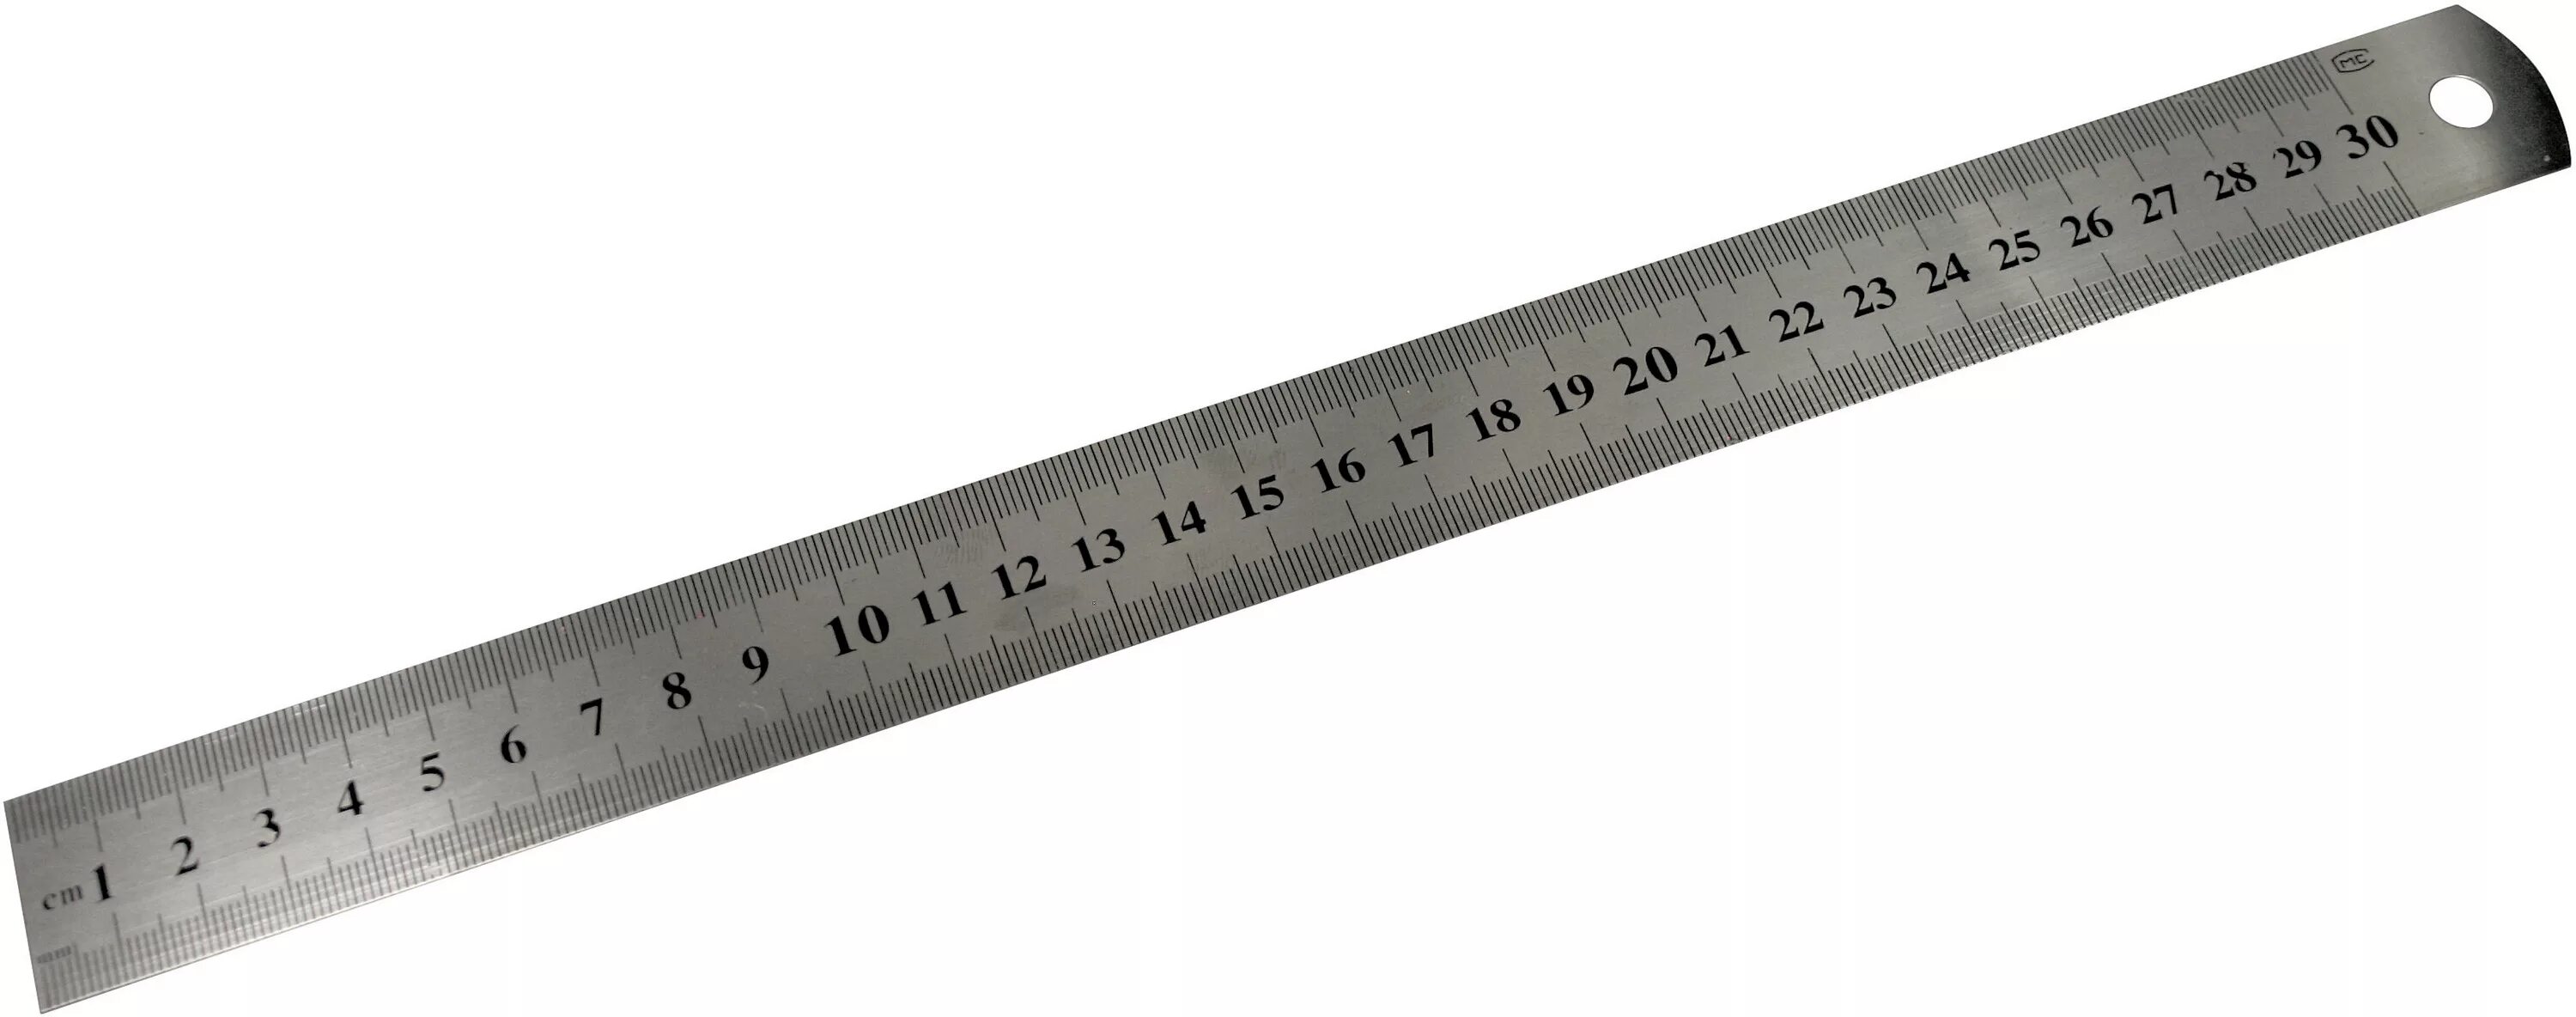 30 сантиметров. Линейка Ruler ANB 0083 30 cm. Линейка 30см h-101с 21085. Long Ruler. Линейка 2 метра.